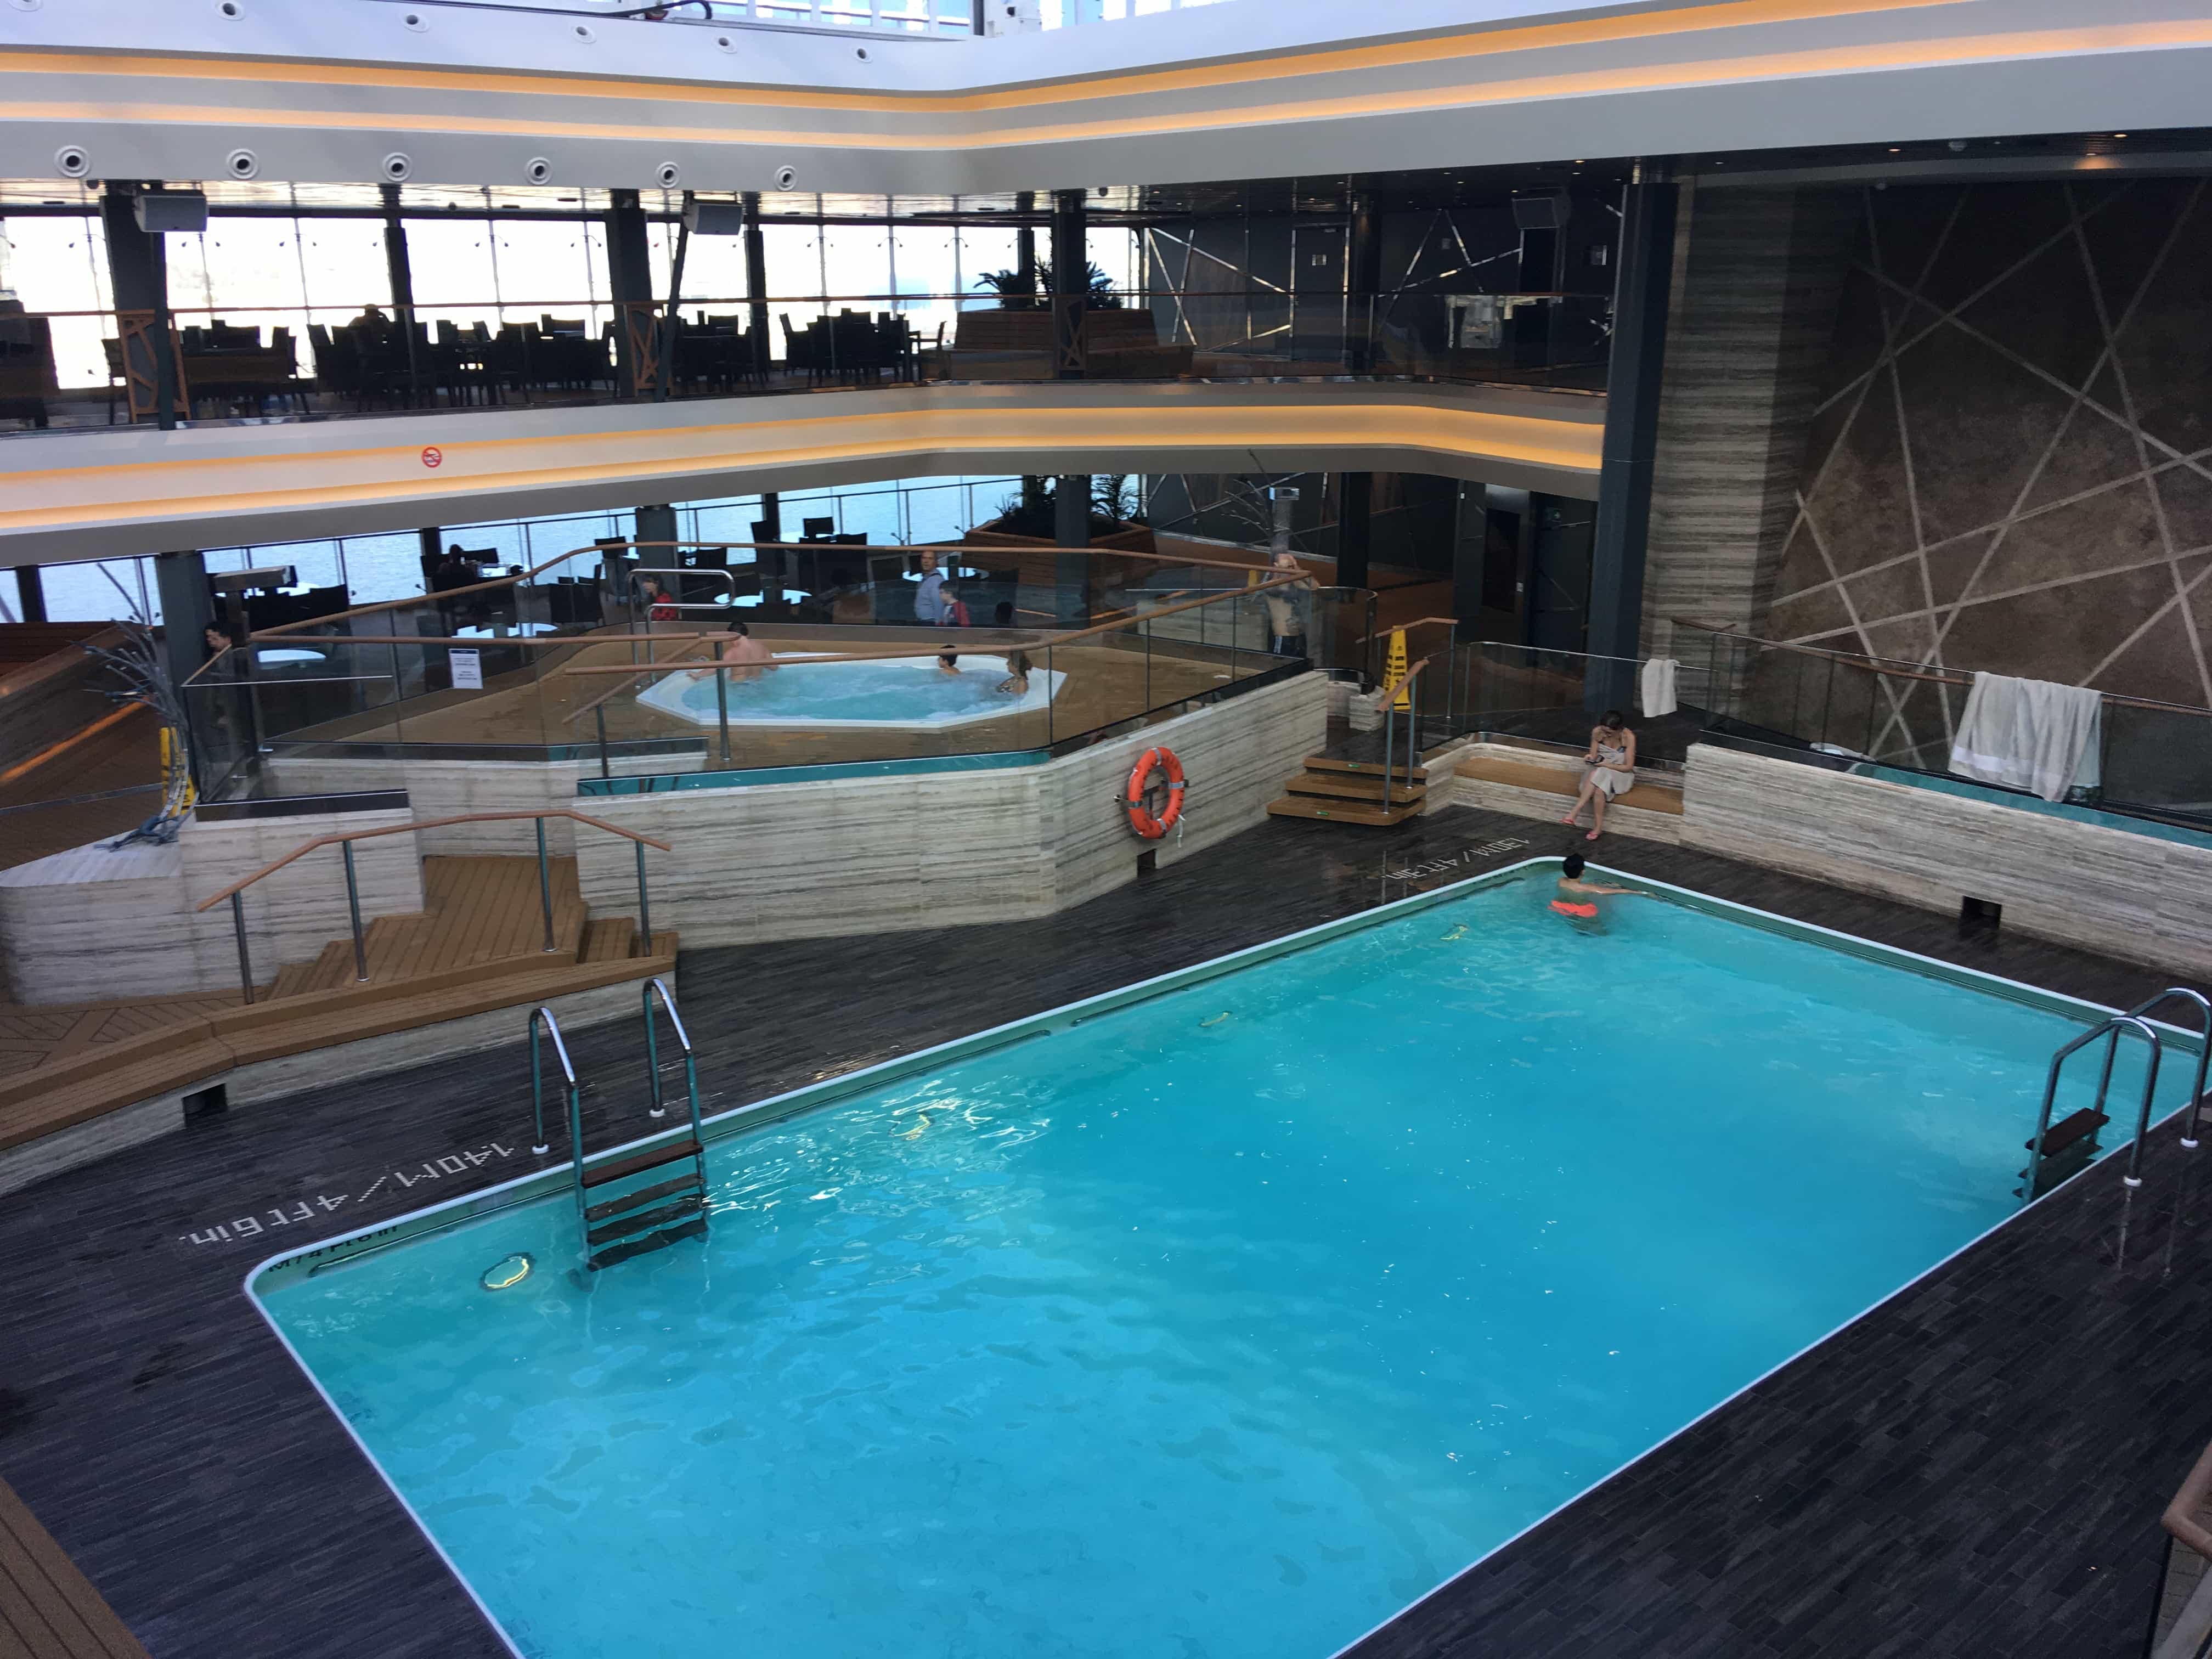 msc cruise indoor pool